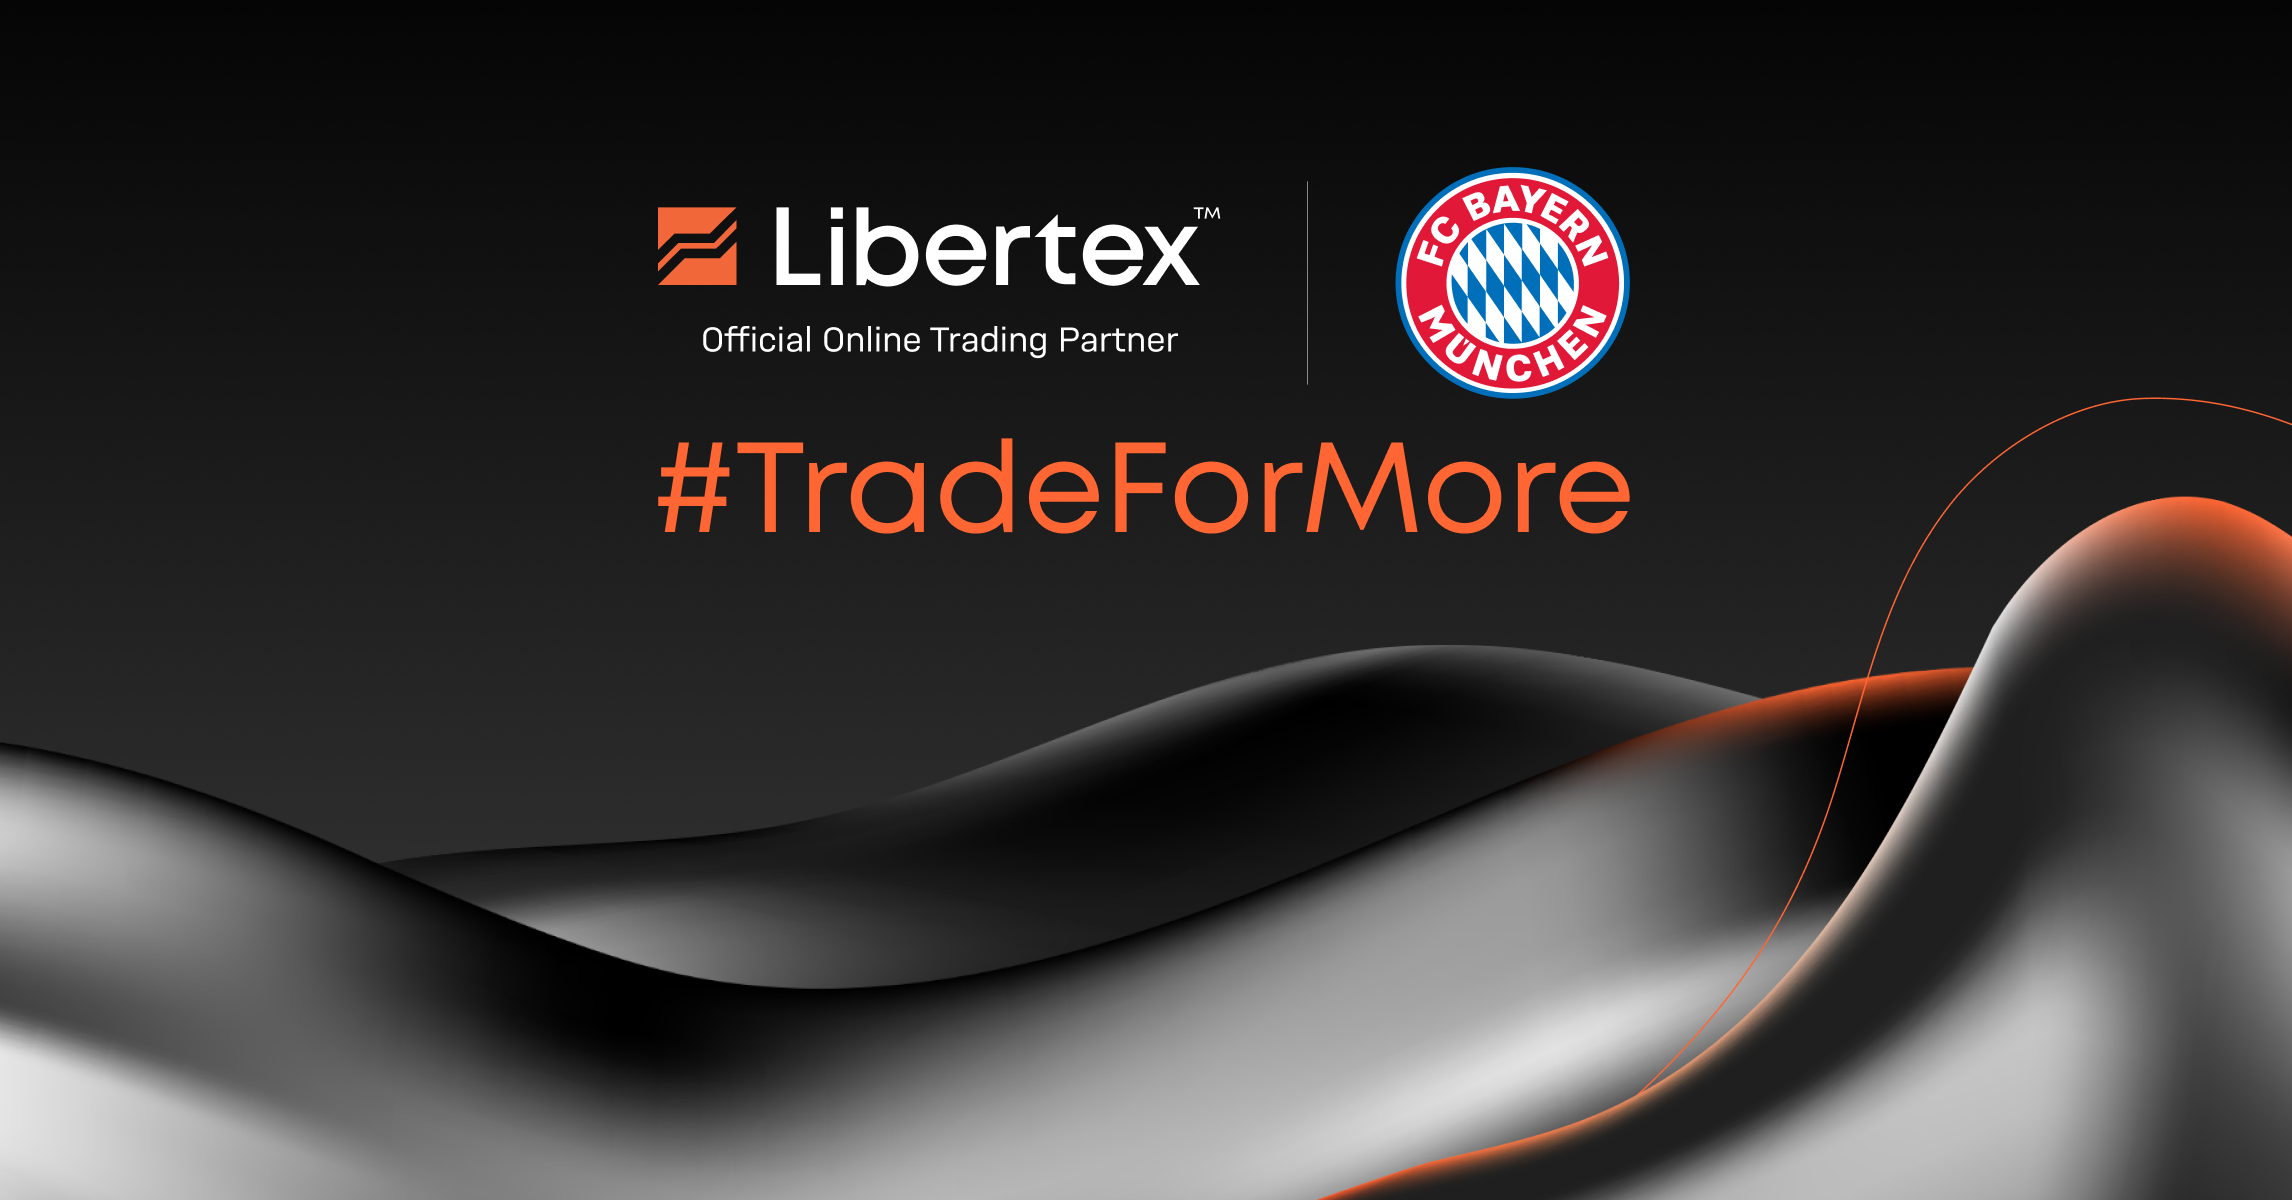 Libertex – Award-winning Trading & Investing Platform | Trade For More